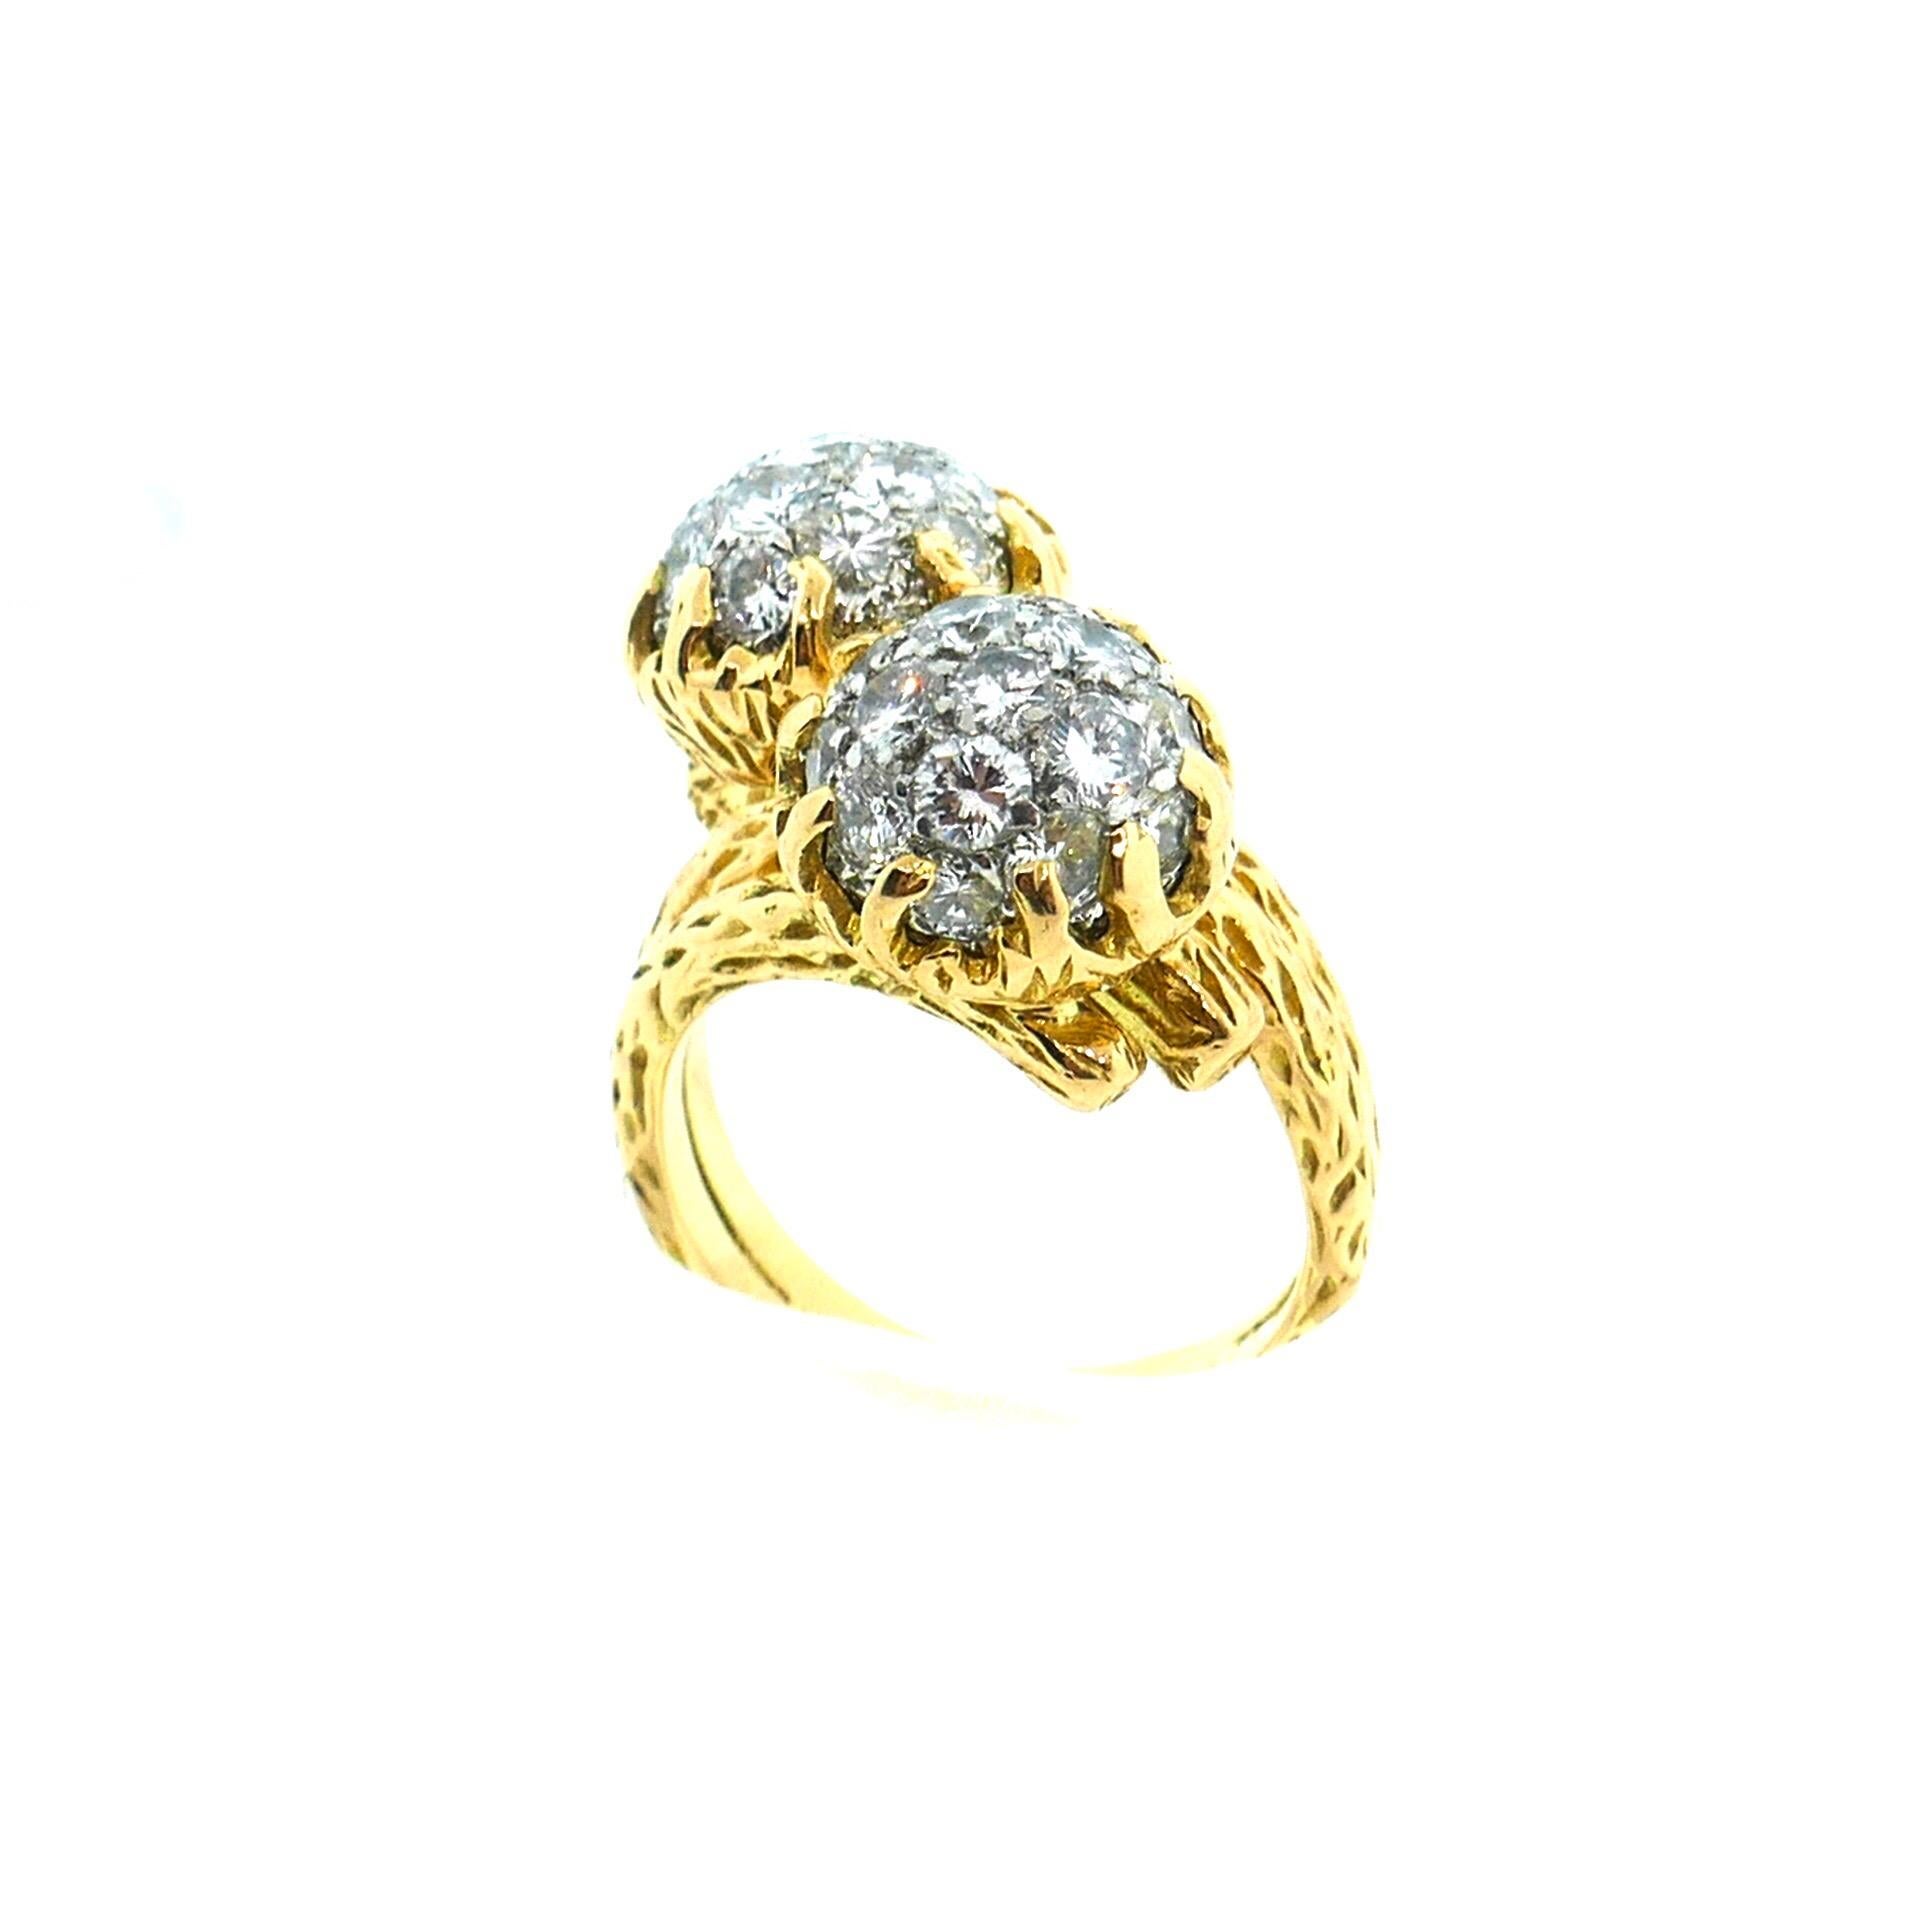 Women's Van Cleef & Arpels Textured Diamond Bypass Ring